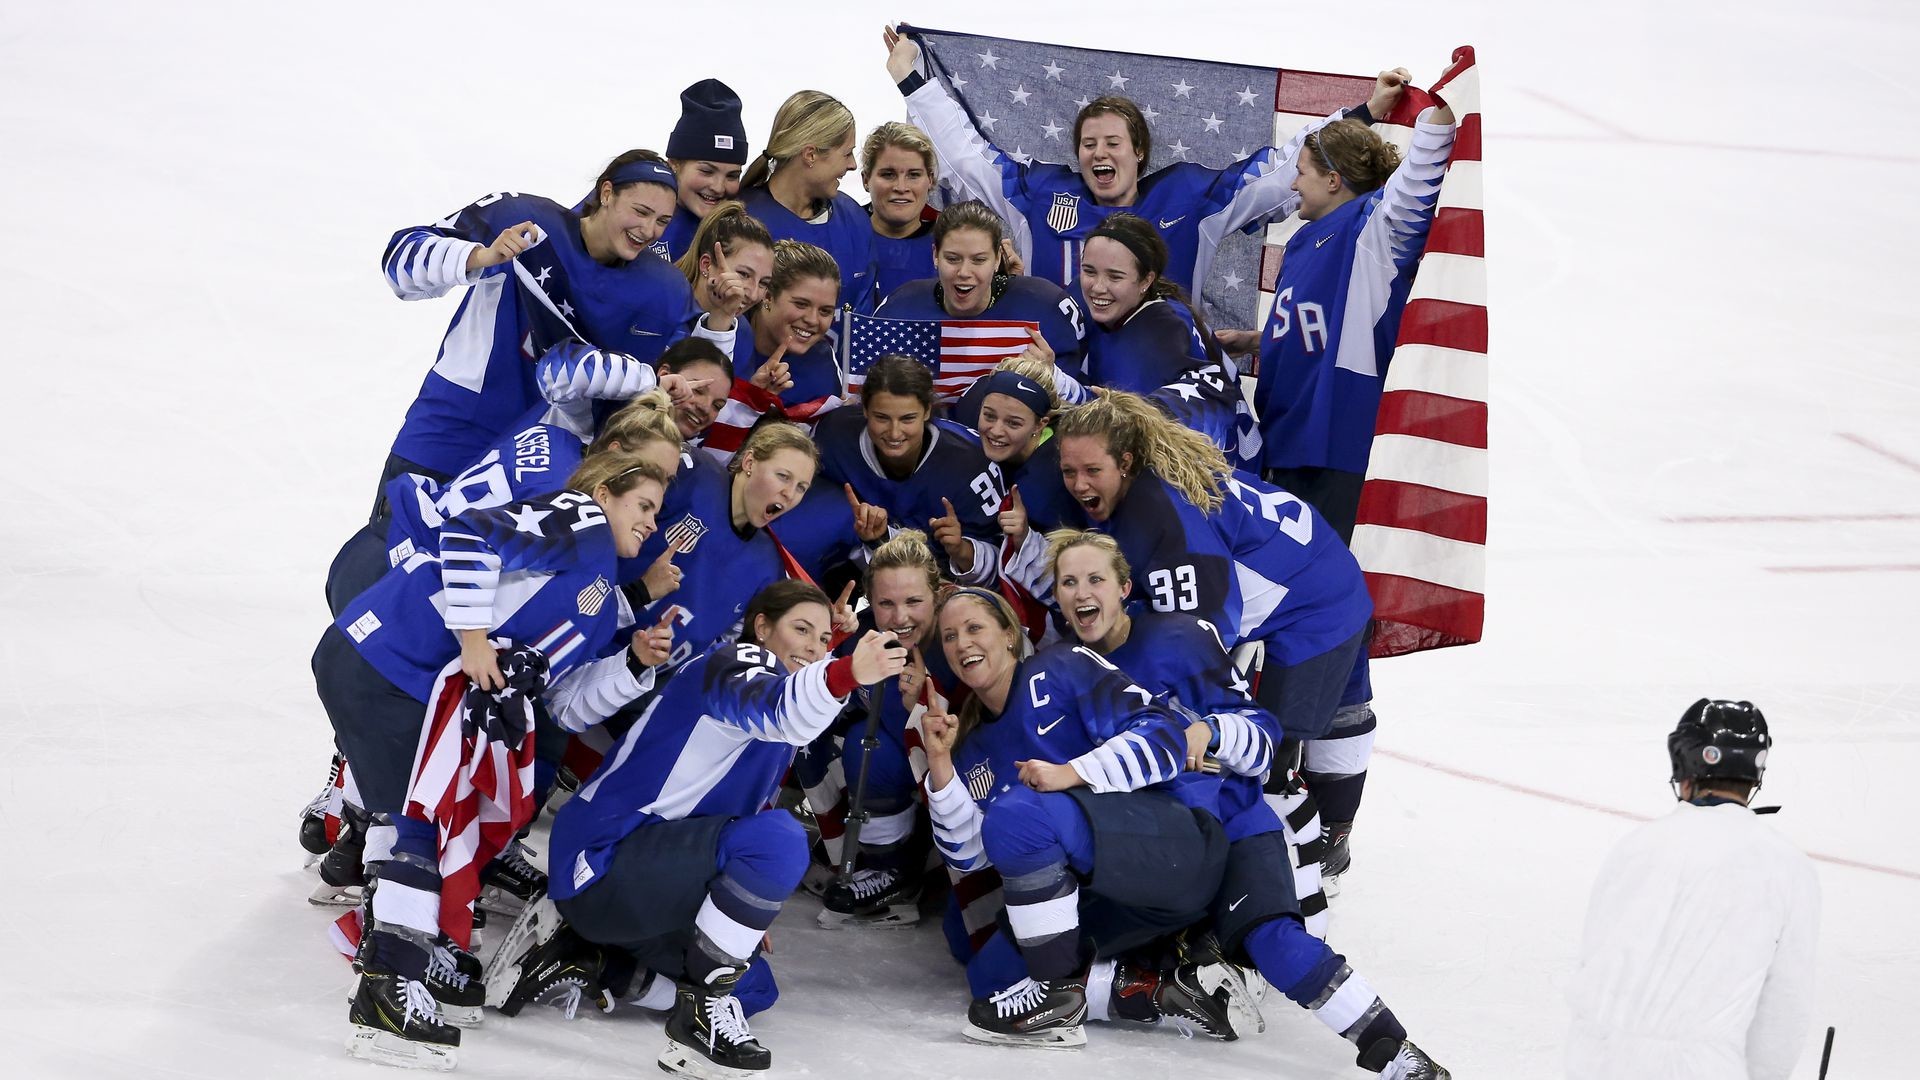 1920x1080 After 20 years, U.S. women's hockey strikes gold again. Team USA